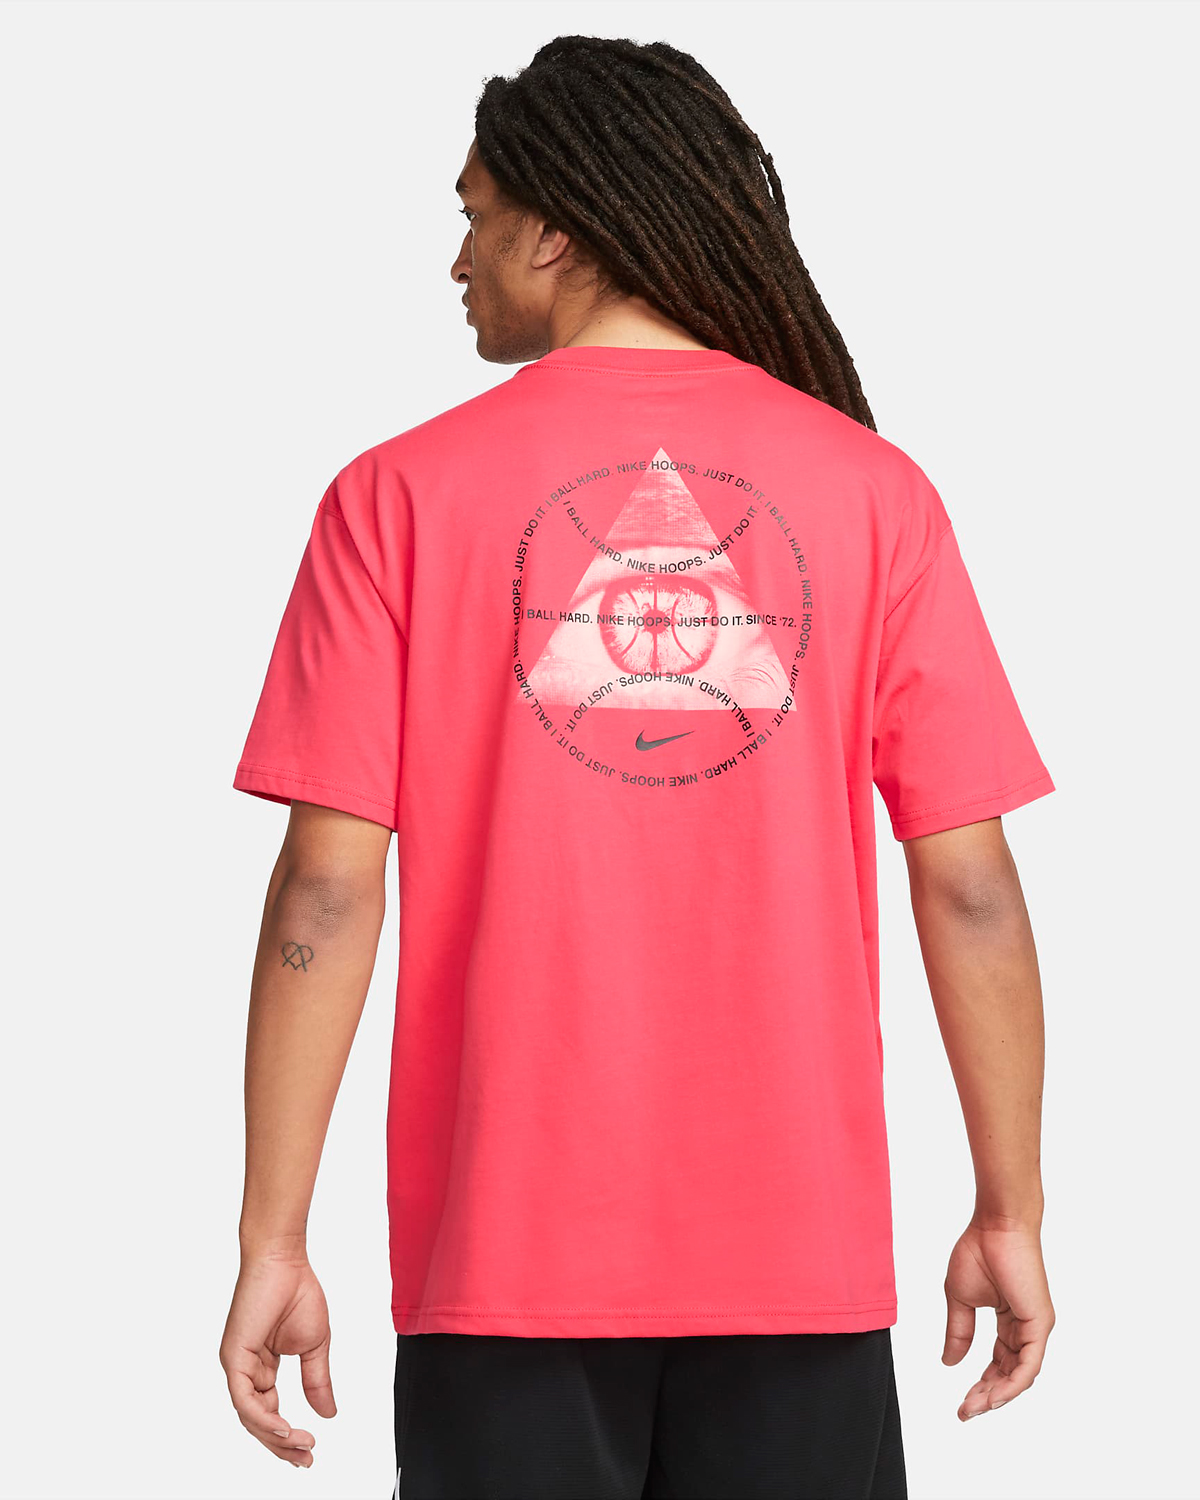 Nike-Basketball-I-Ball-Hard-T-Shirt-Fusion-Red-2